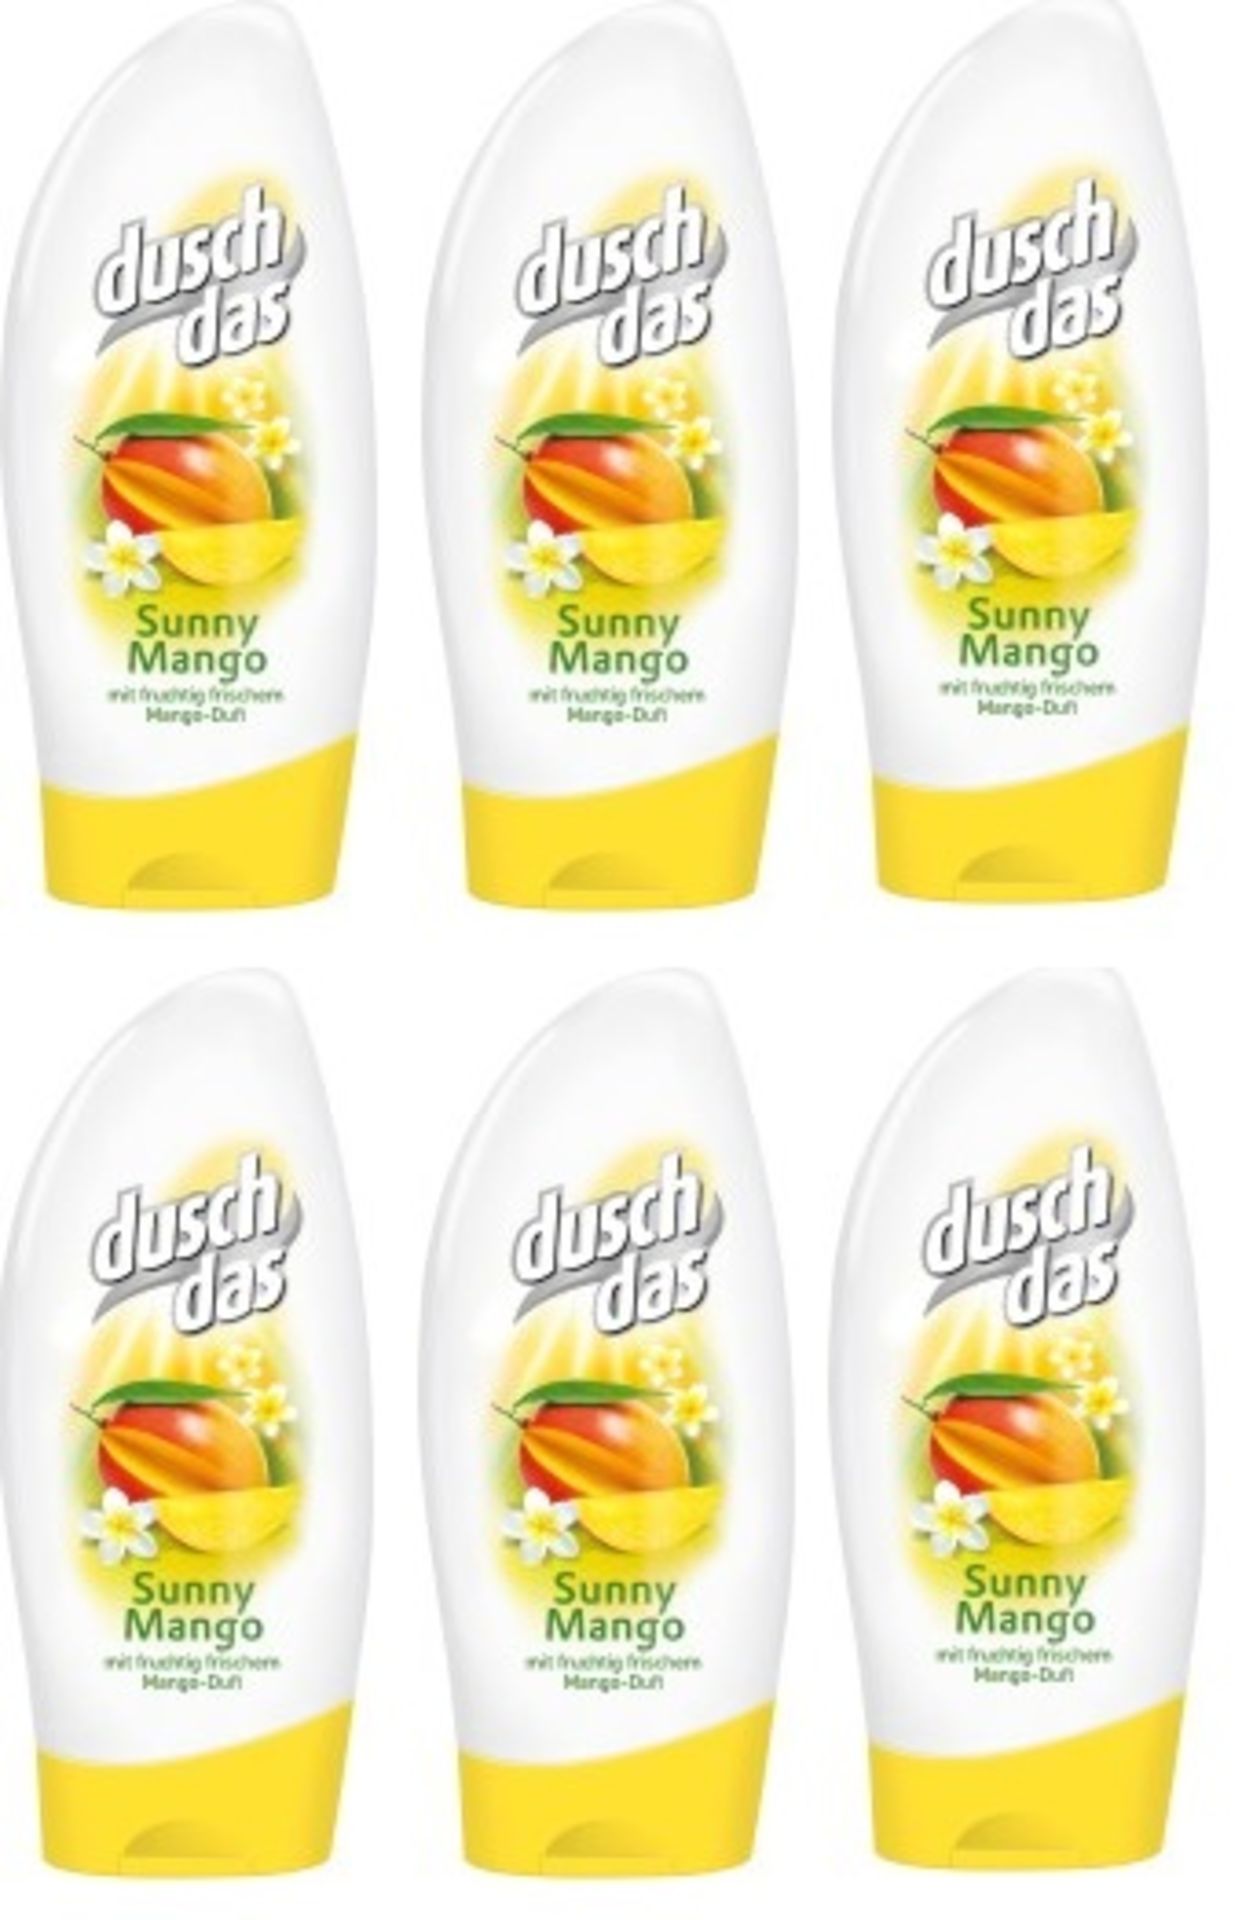 V Brand New Lot Of 6 Dusch Das Sunny Mango Shower Gel 250 ml Total eBay Price £20.46 (Note Bottle